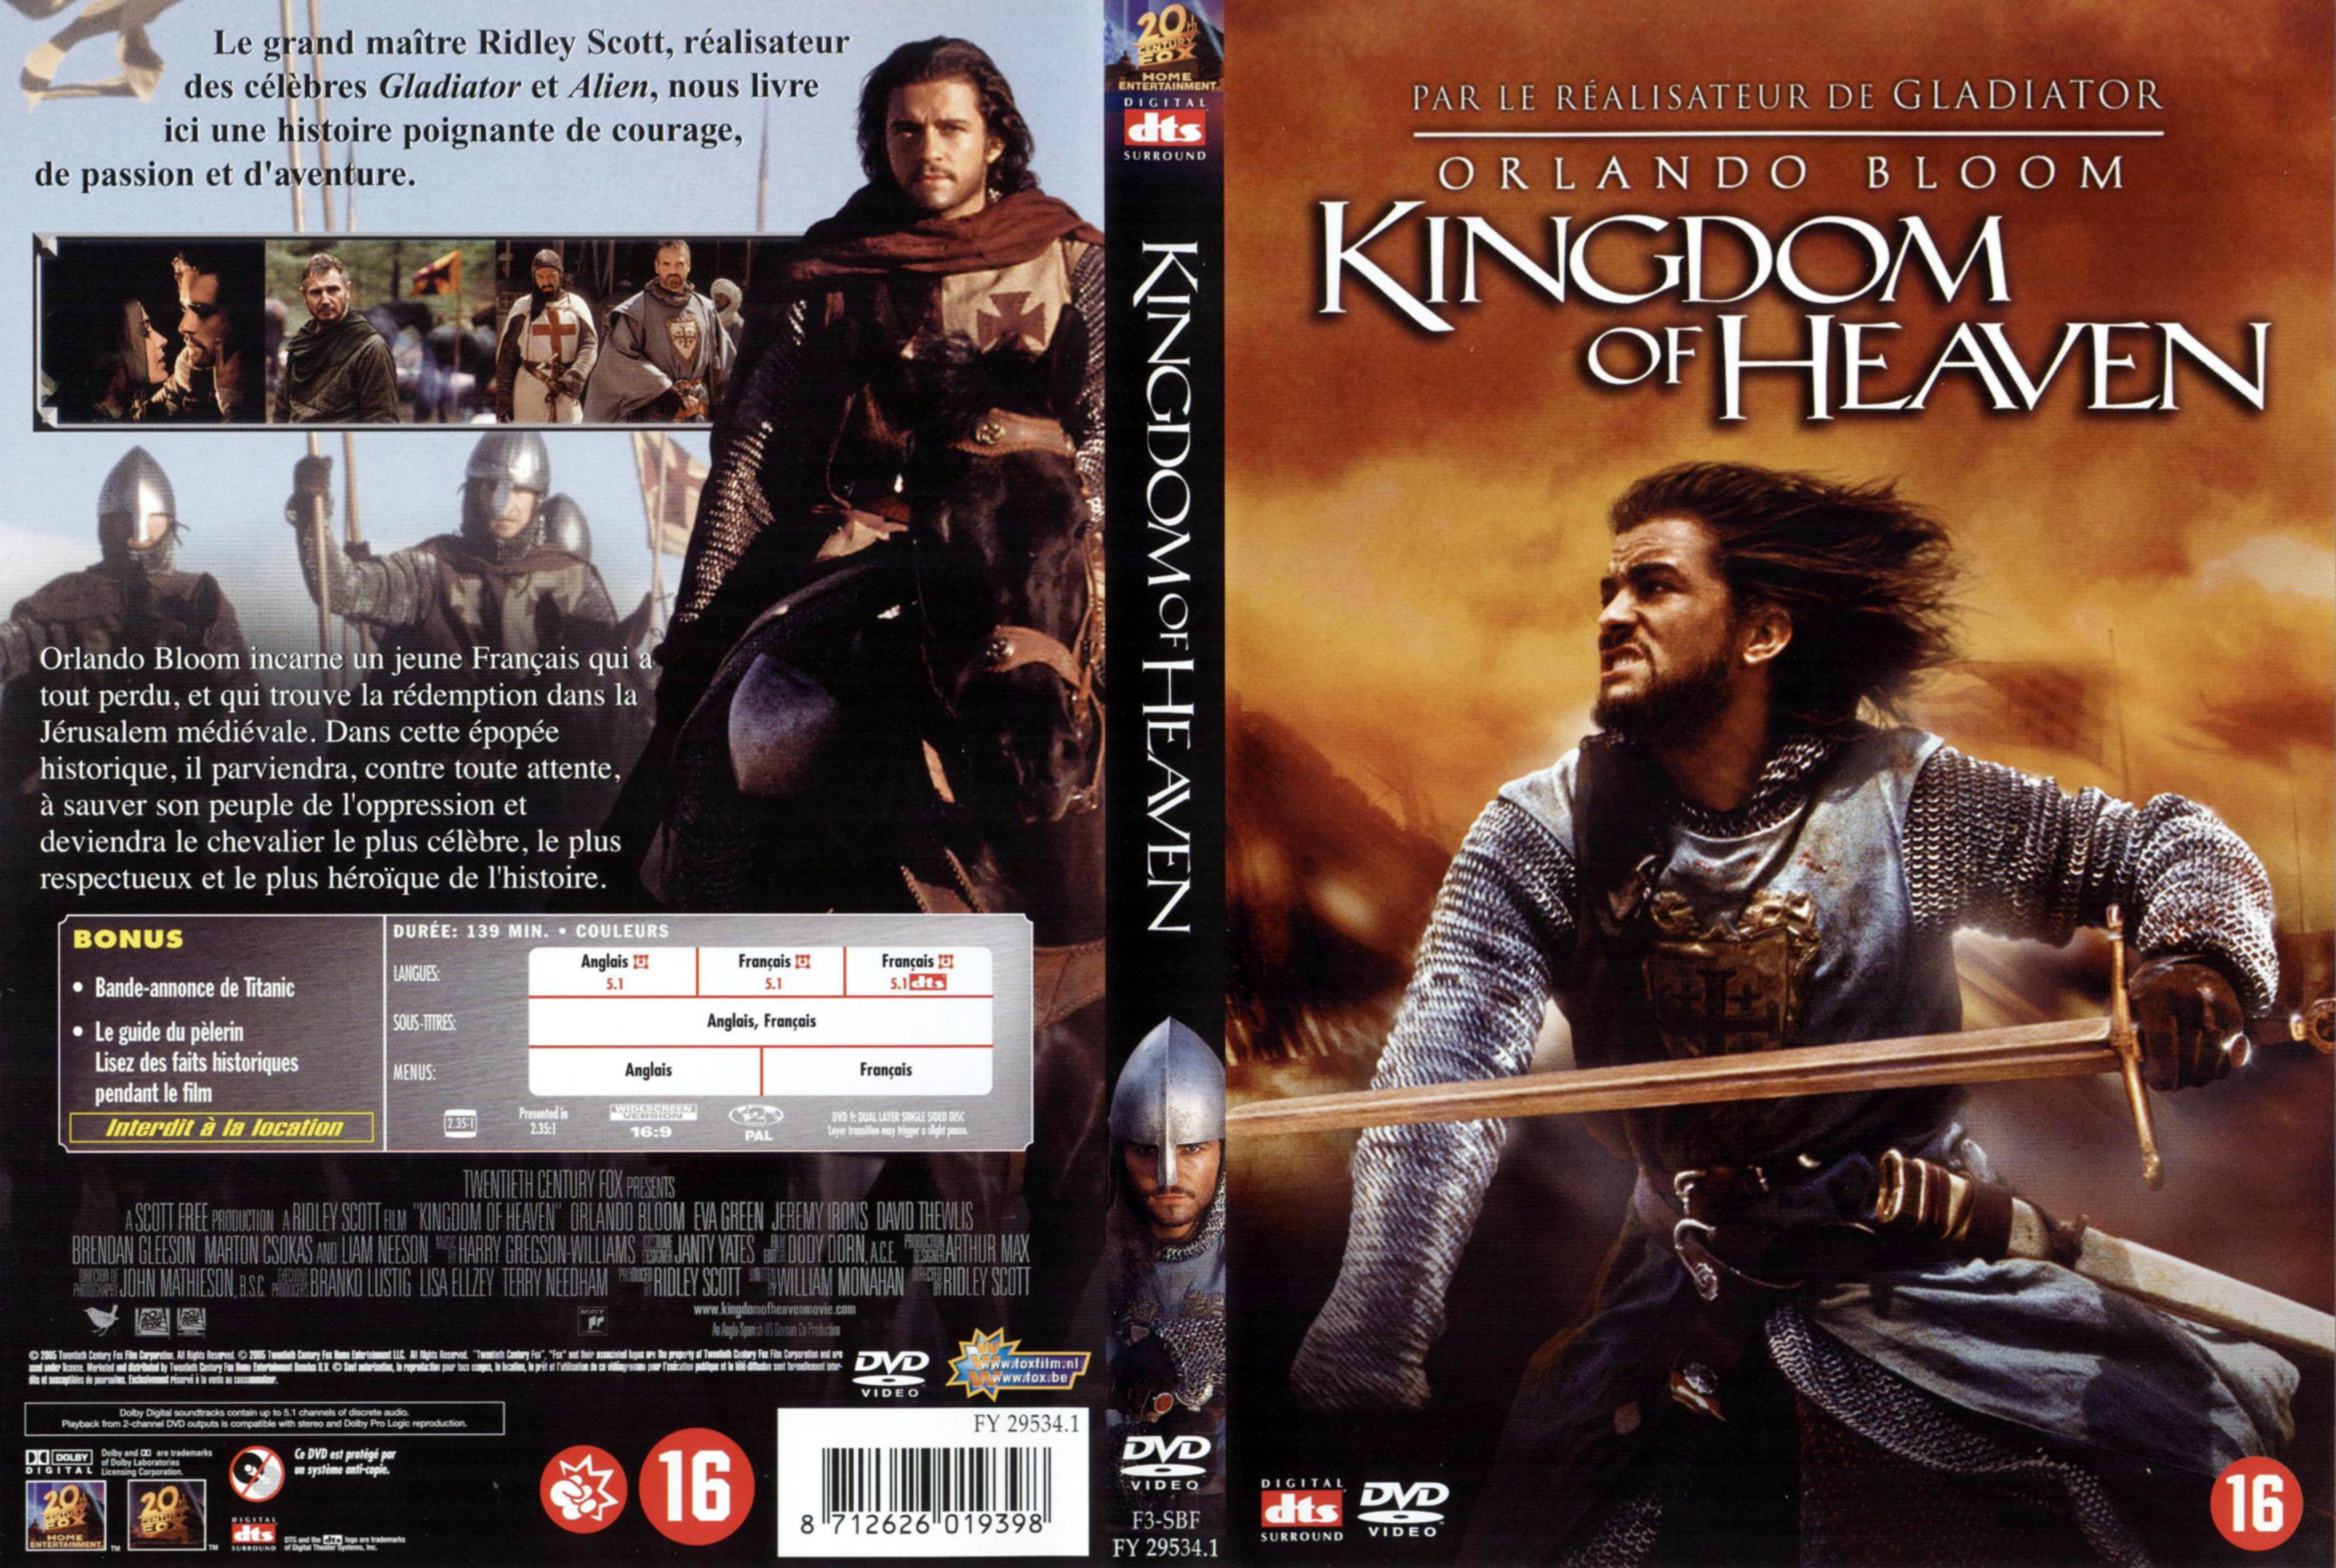 Jaquette DVD Kingdom of heaven v2